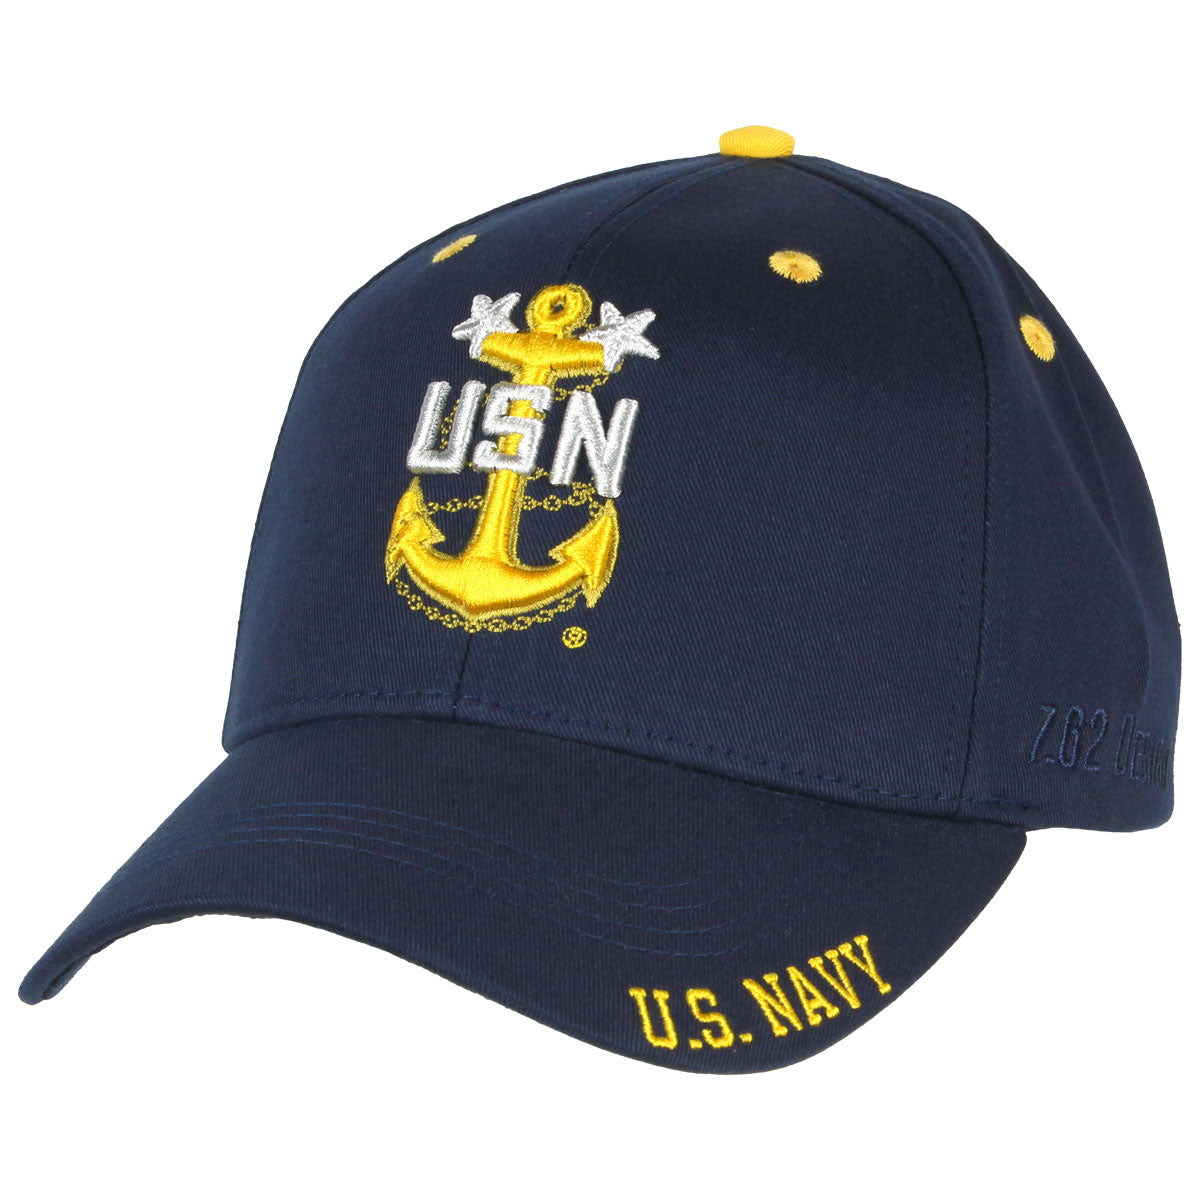 Us Navy Master Chief Twill Hat 762 Design